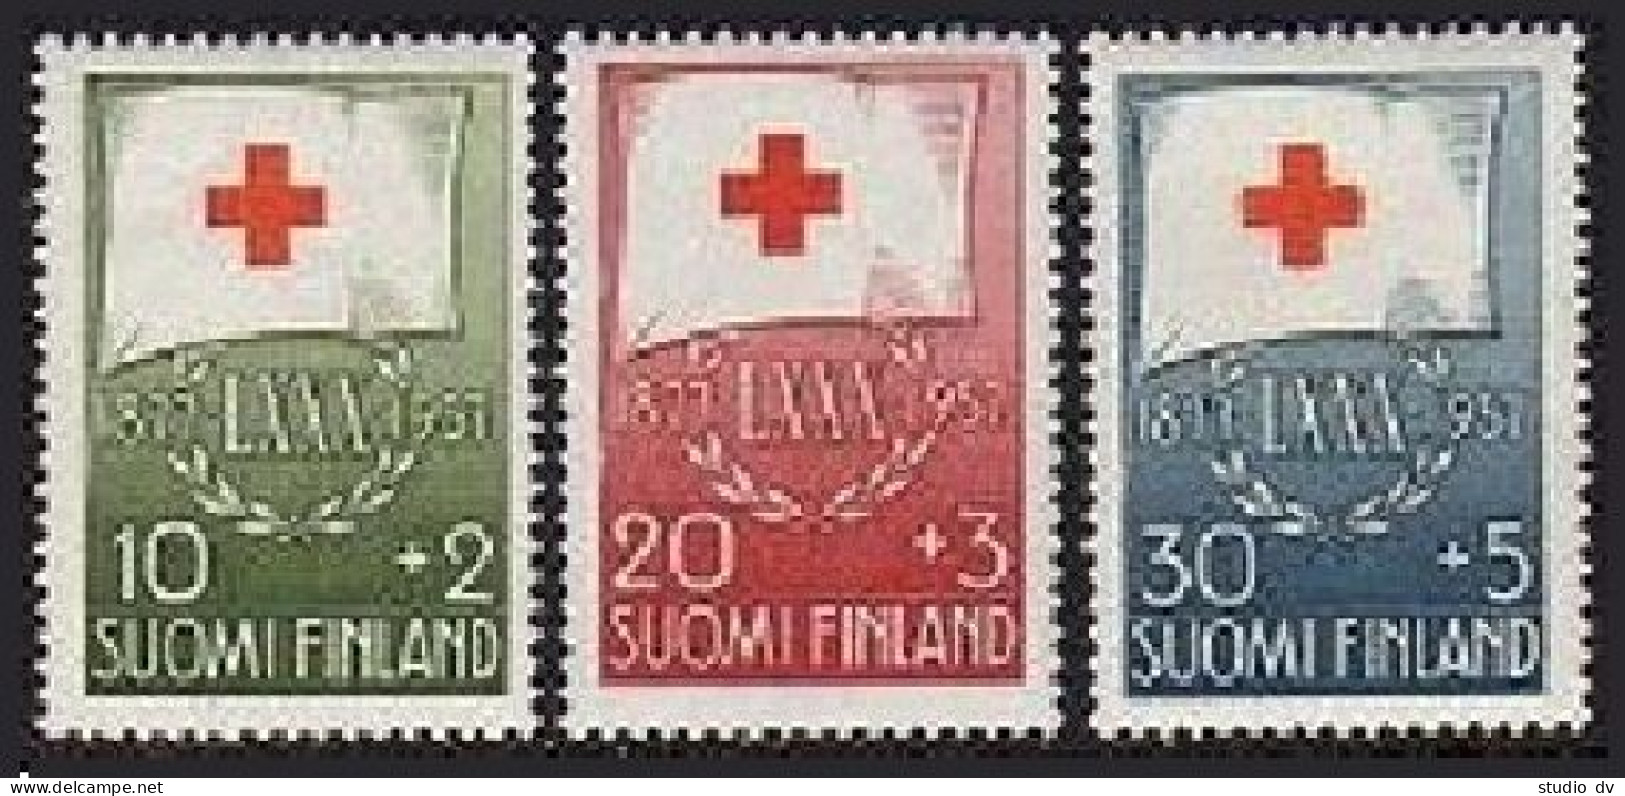 Finland B145-B147, MNH. Michel 482-484. Finnish Red Cross-1958, 80th Ann. - Nuevos